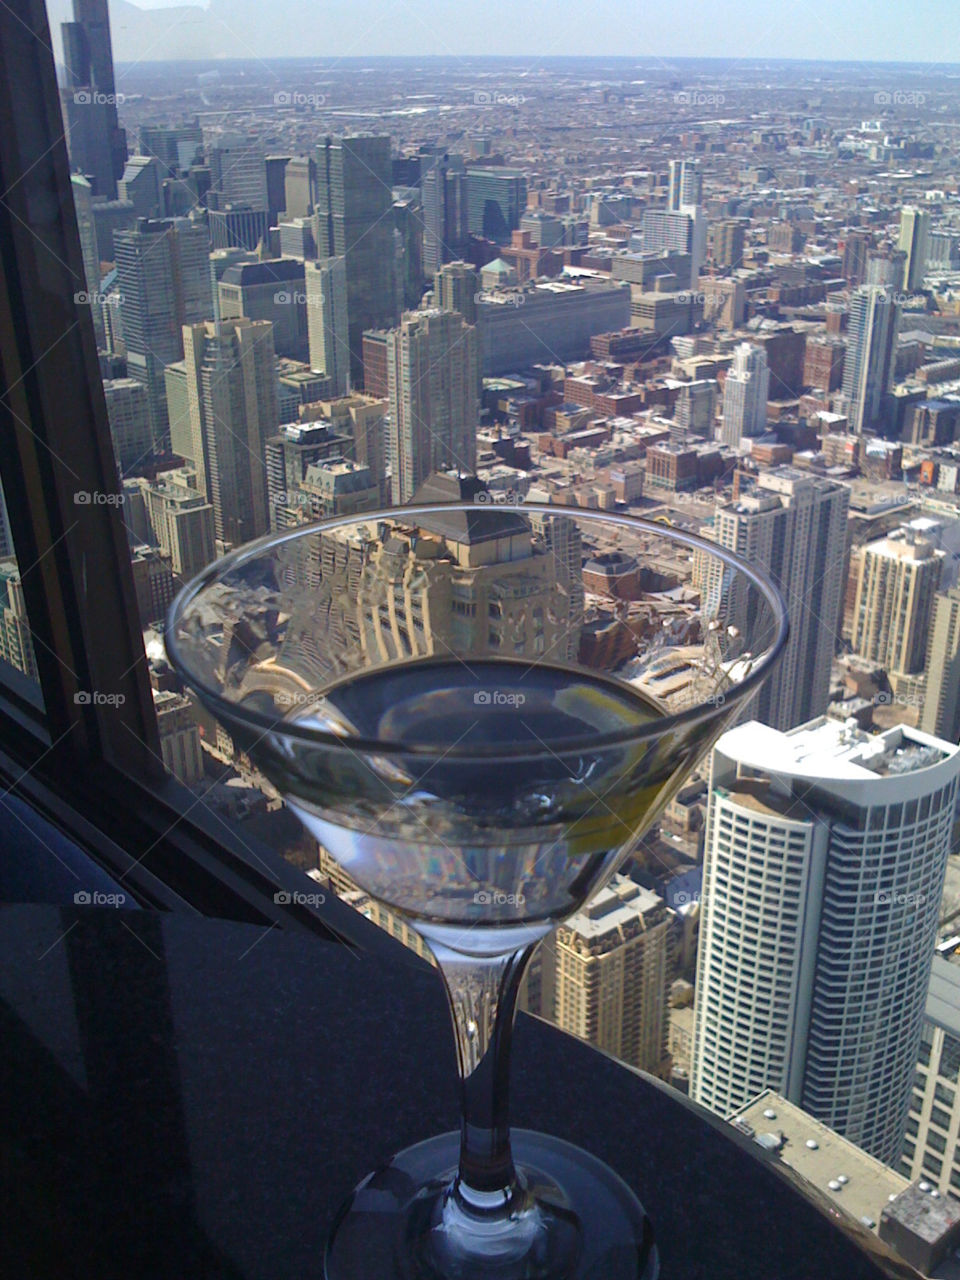 martini overlooking chicago john hancock building chicago by Calden44